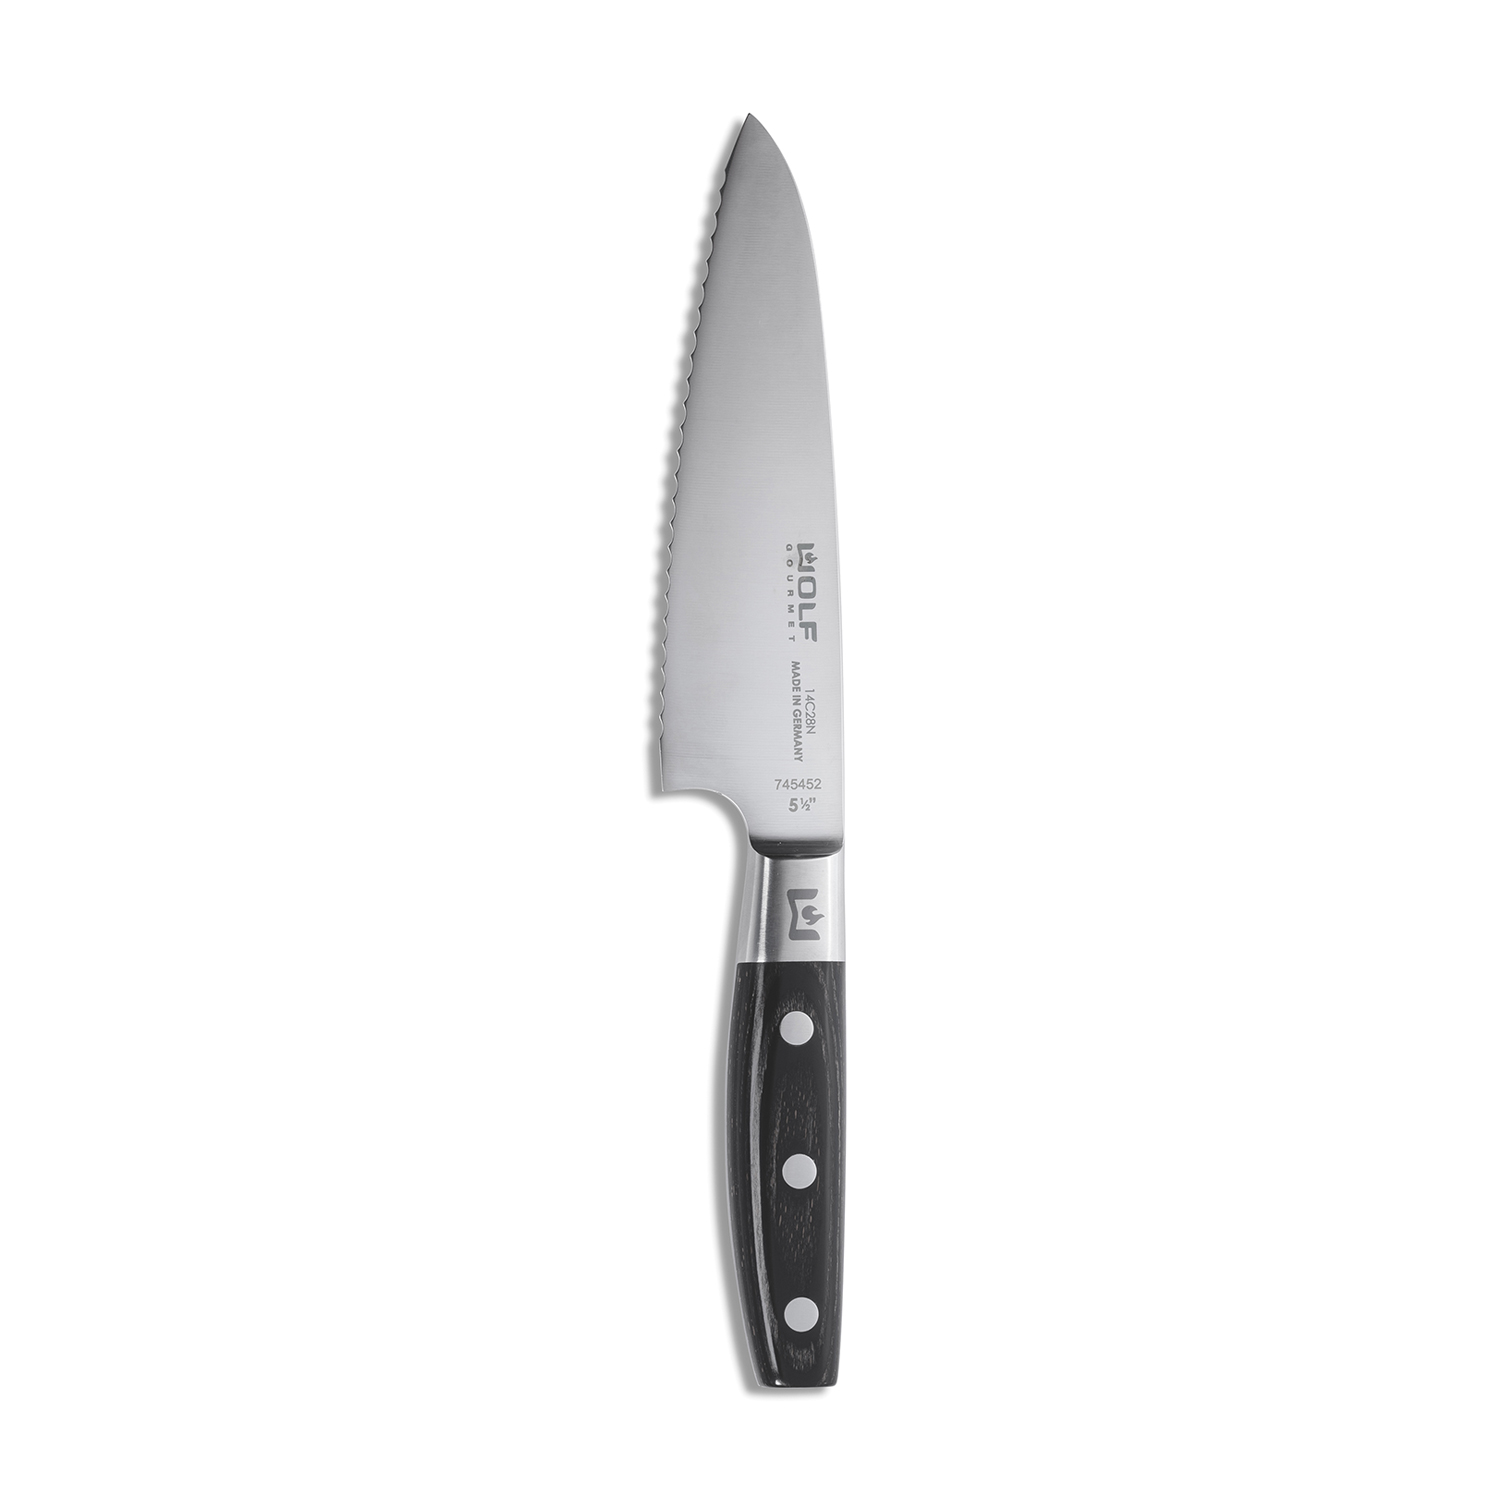 Cutlery-Pro Serrated Utility Knife Set of 2, NSF, German Carbon Steel,  5-Inch Blade, n/a - Kroger